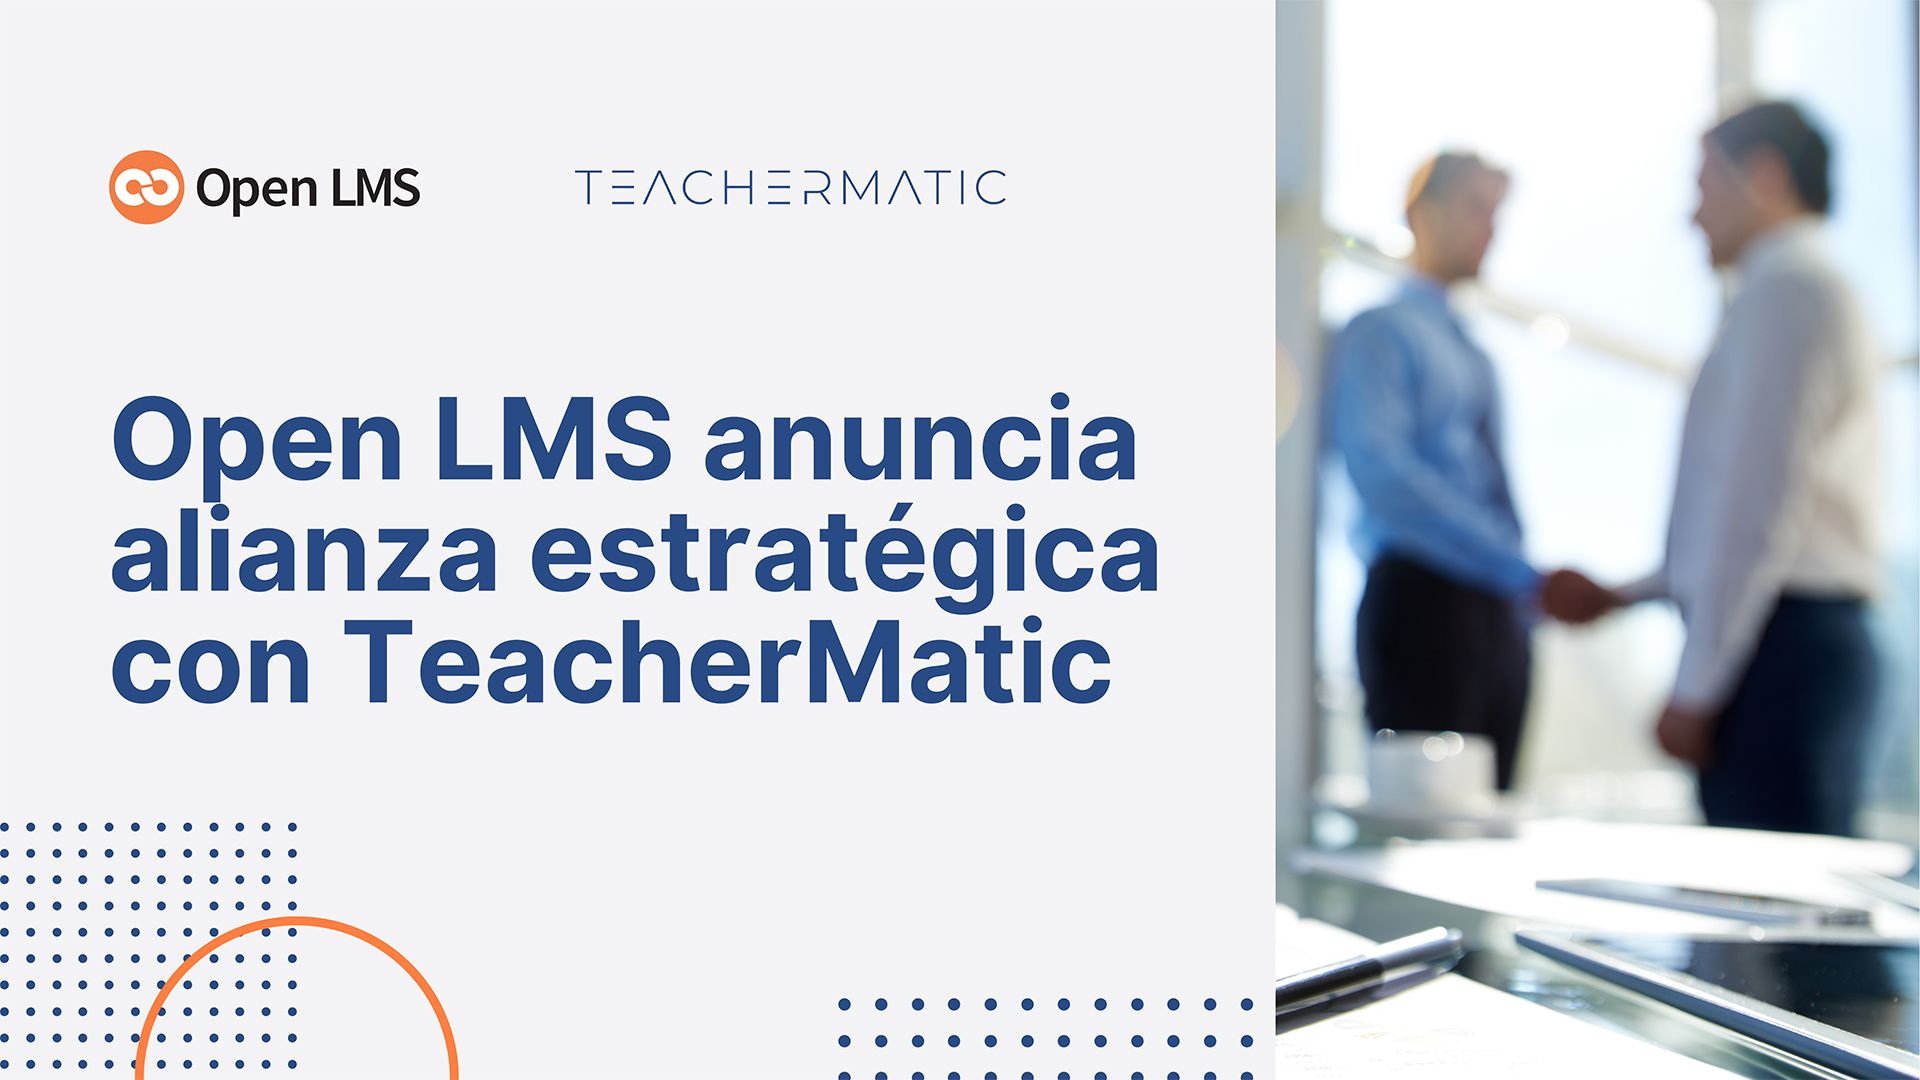 Open LMS anuncia alianza estratégica con TeacherMatic para ayudar a educadores a prosperar con la IA